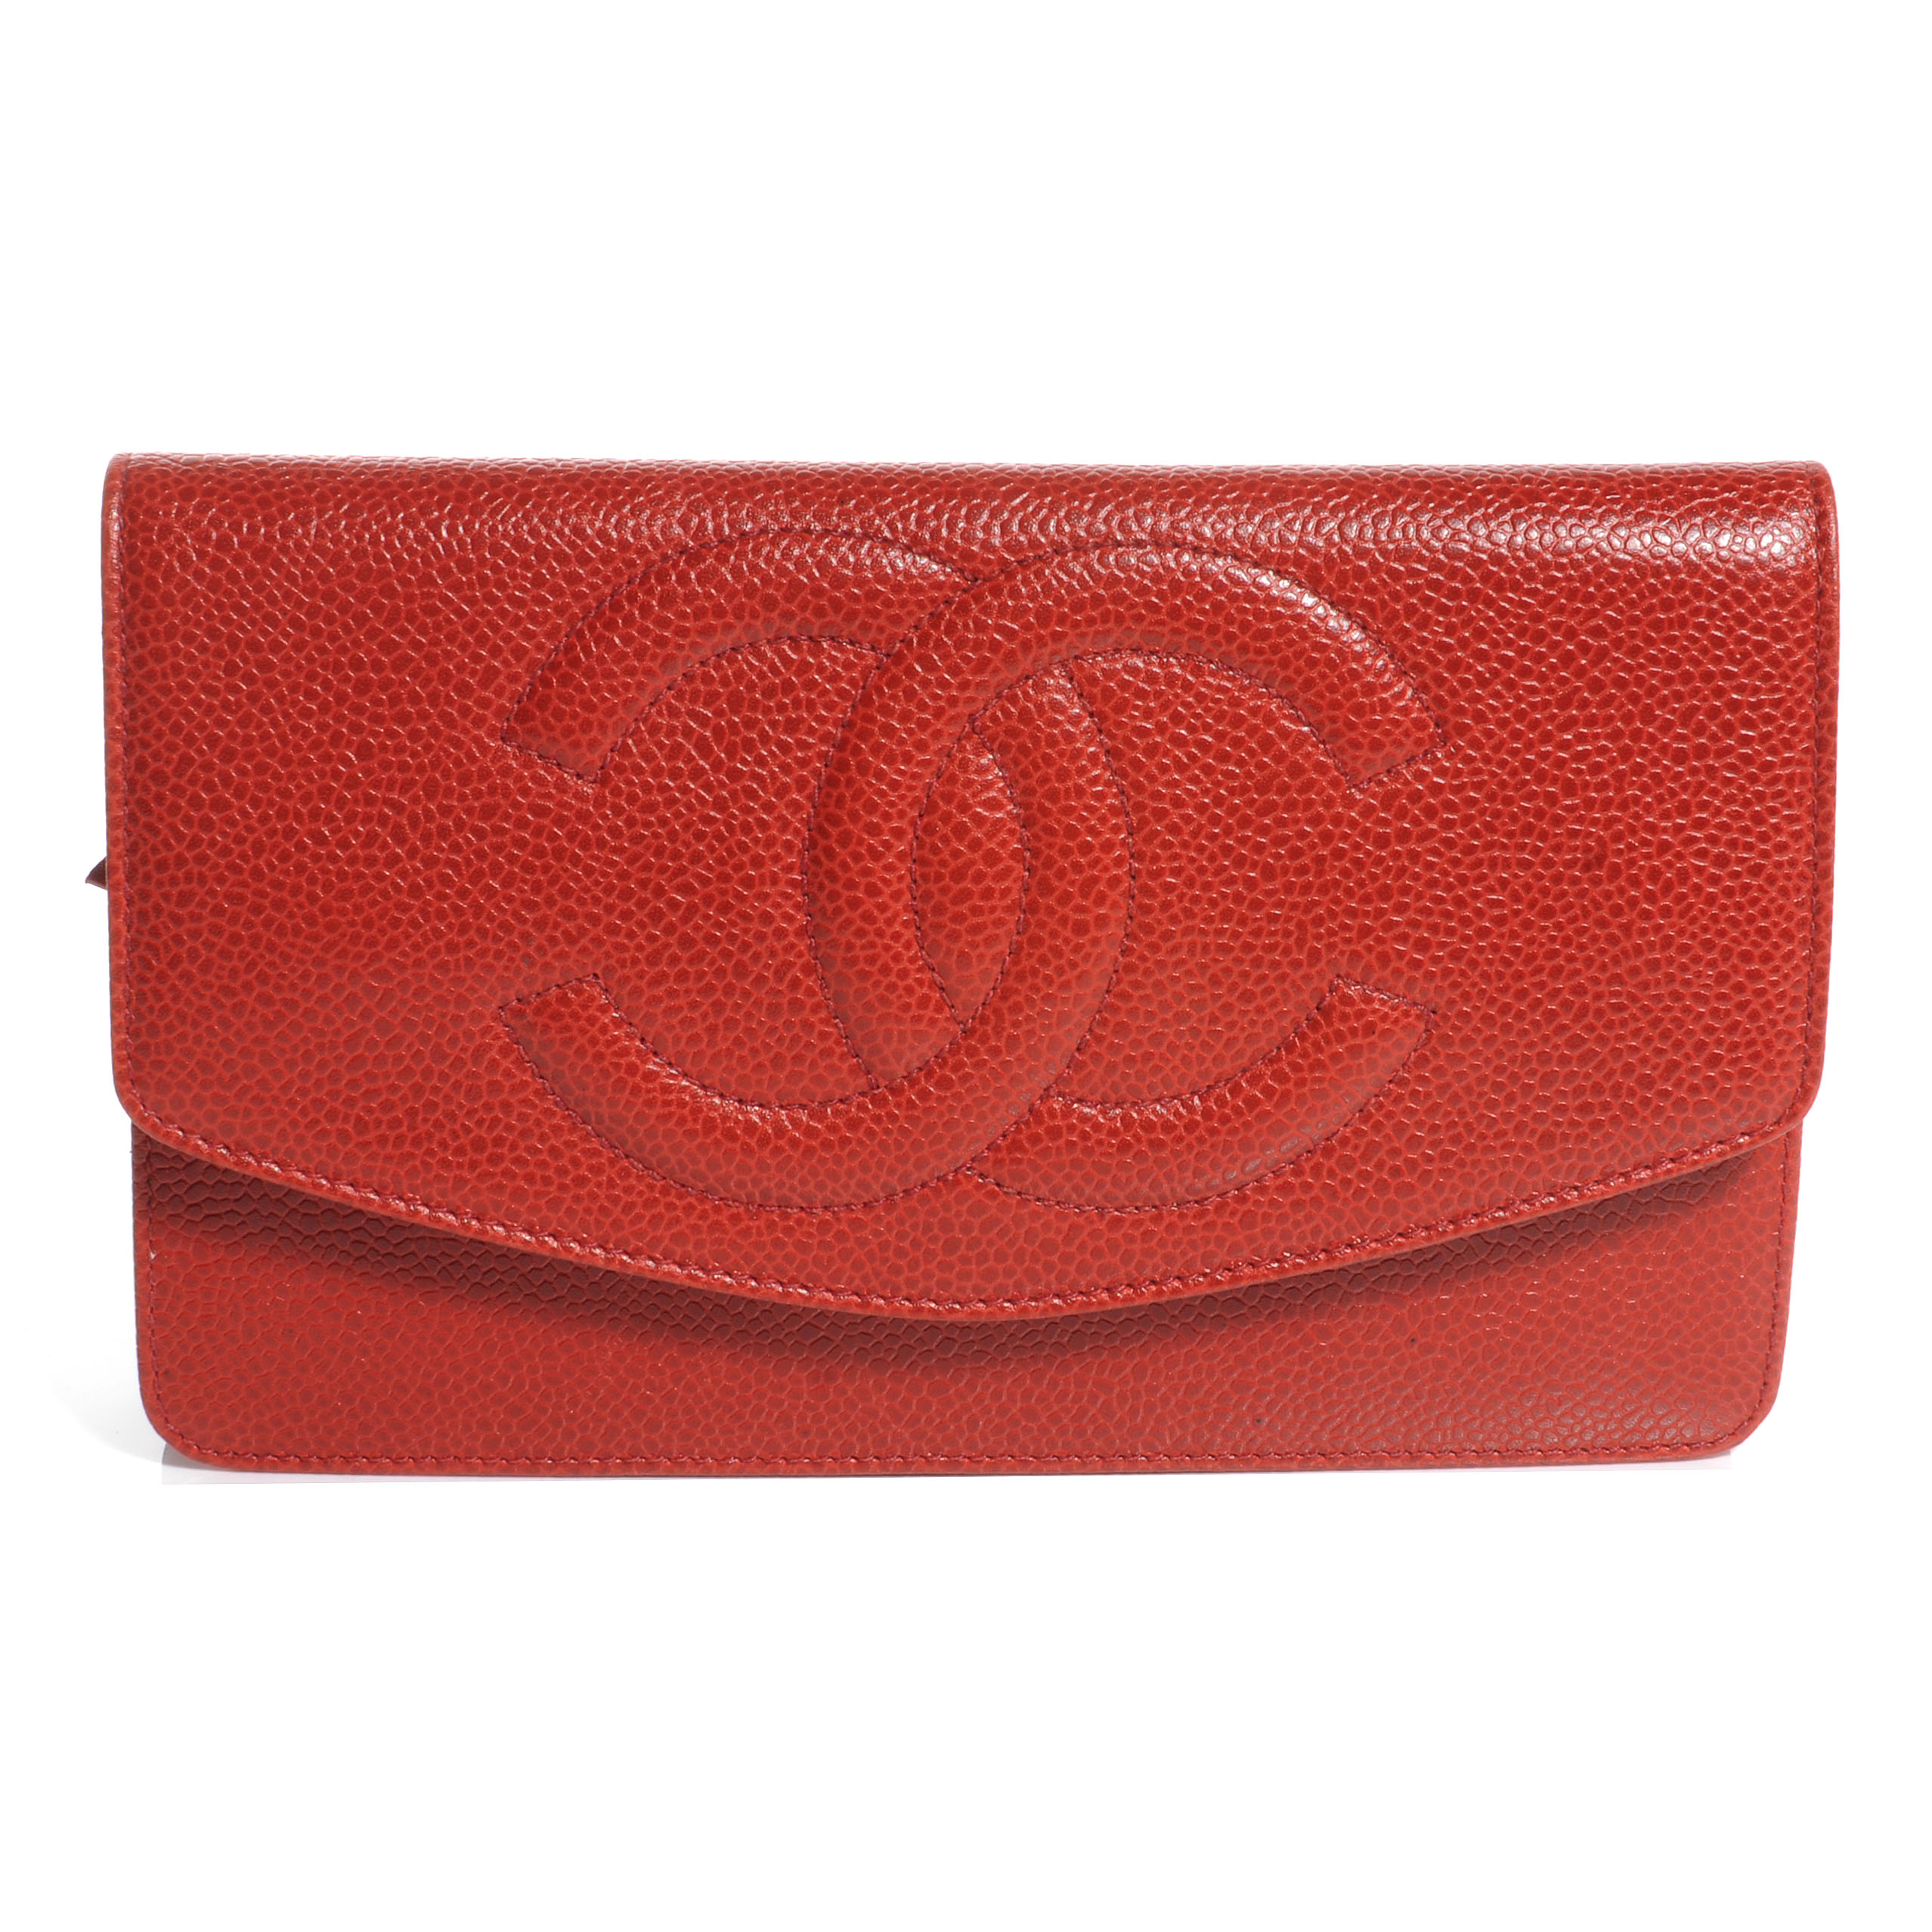 CHANEL Caviar CC Flap Clutch Wallet Red 57711